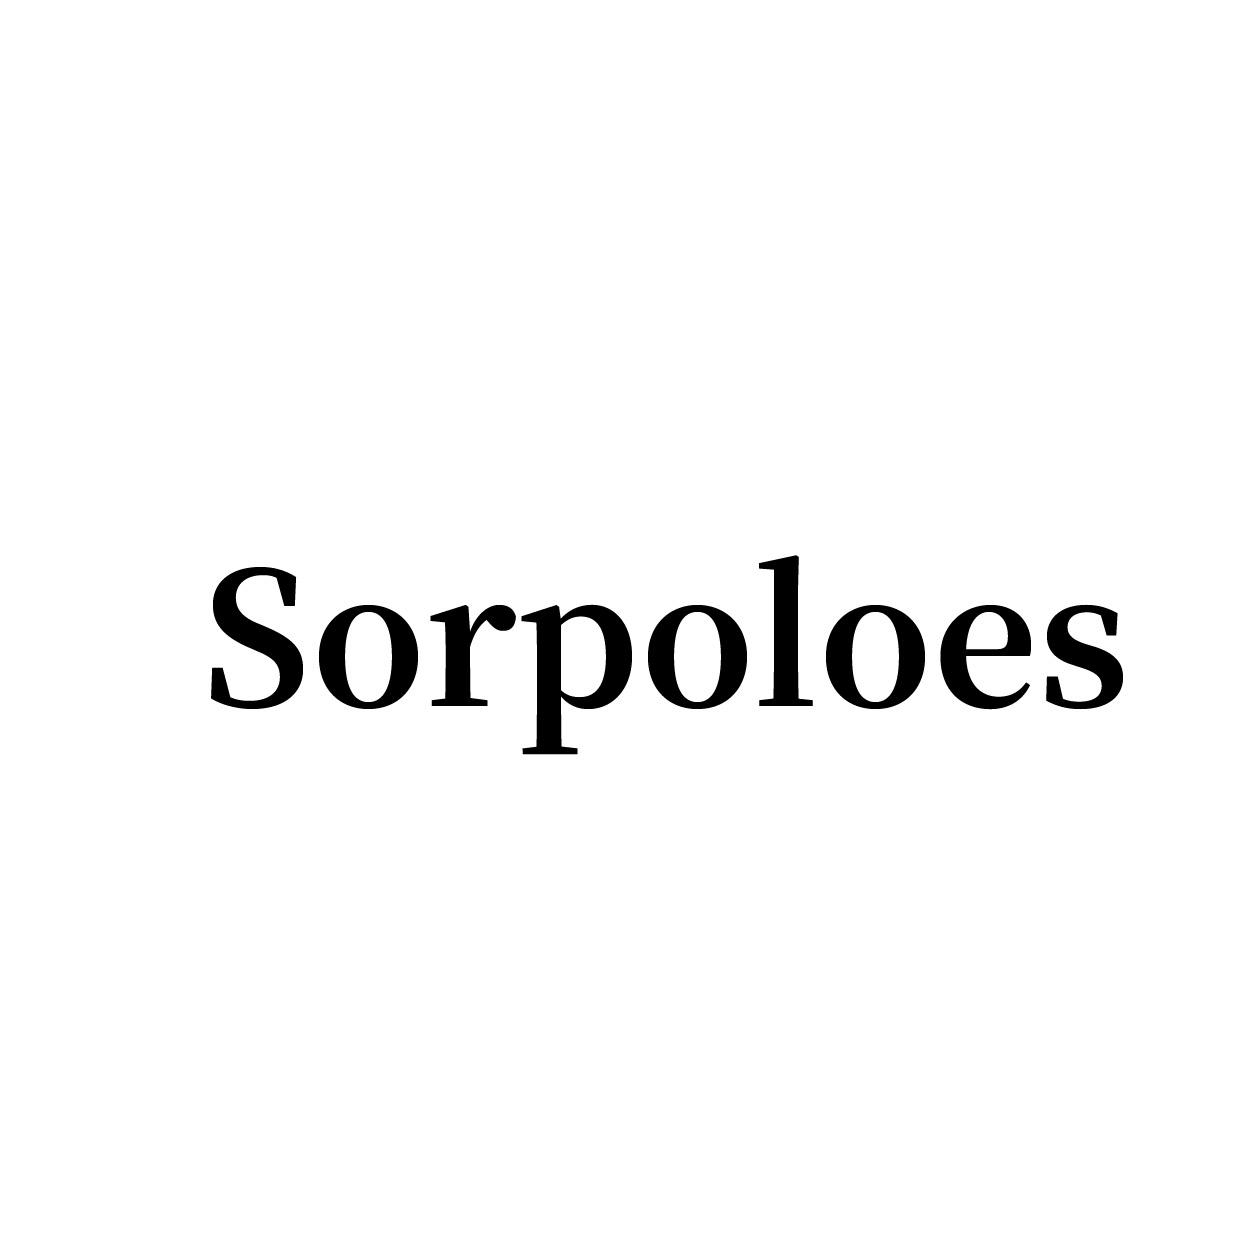 25类-服装鞋帽SORPOLOES商标转让